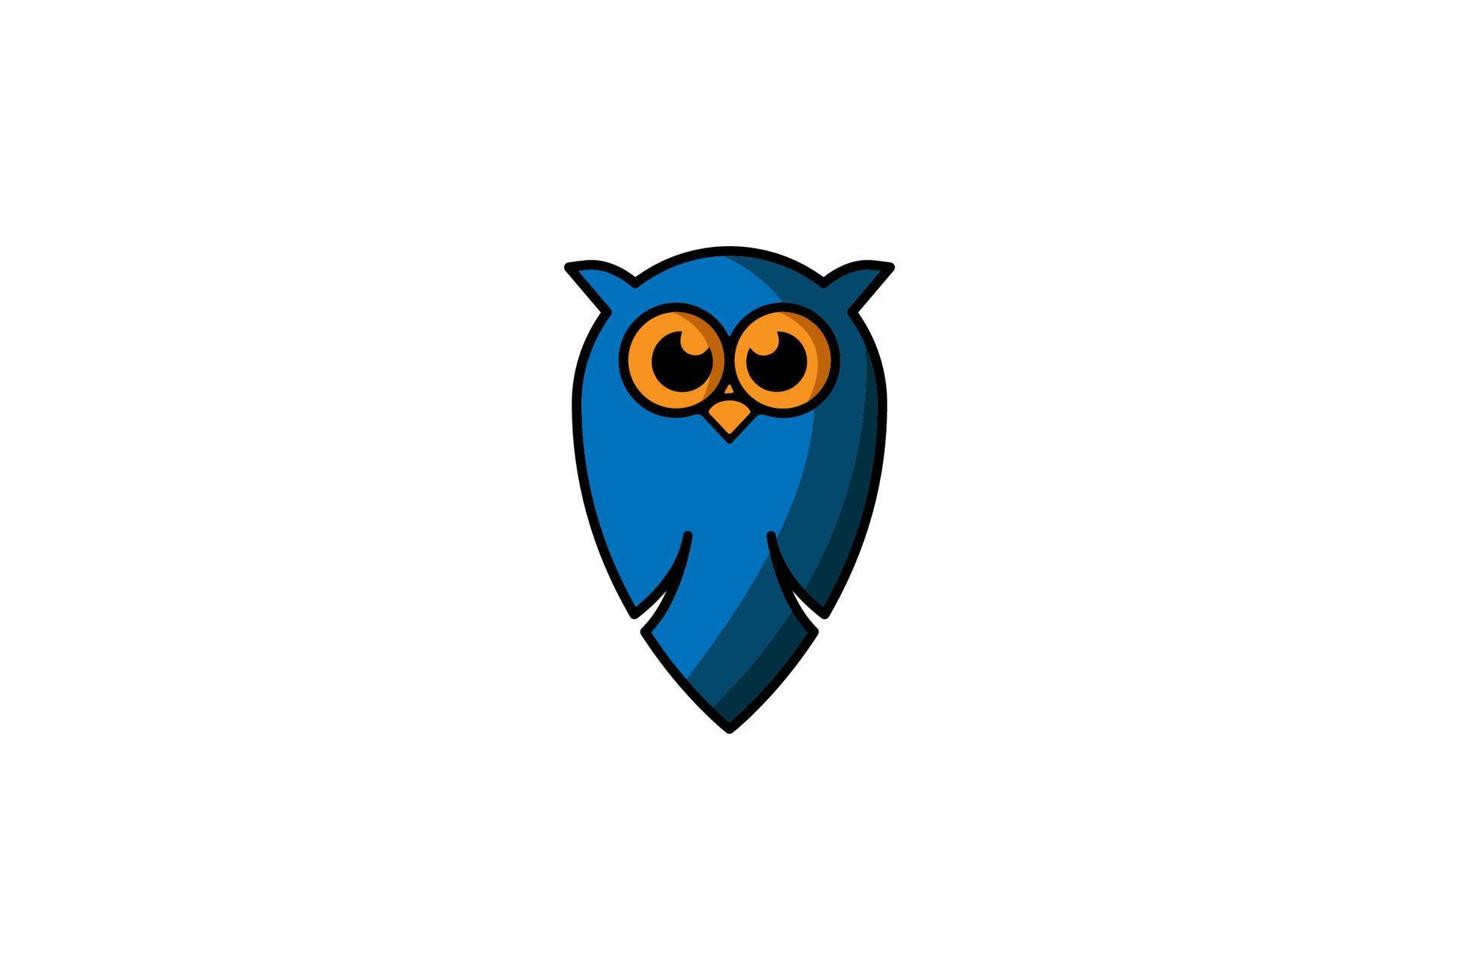 Simple Minimalist Cute Blue Owl Cartoon Mascot Character Logo Design Vector